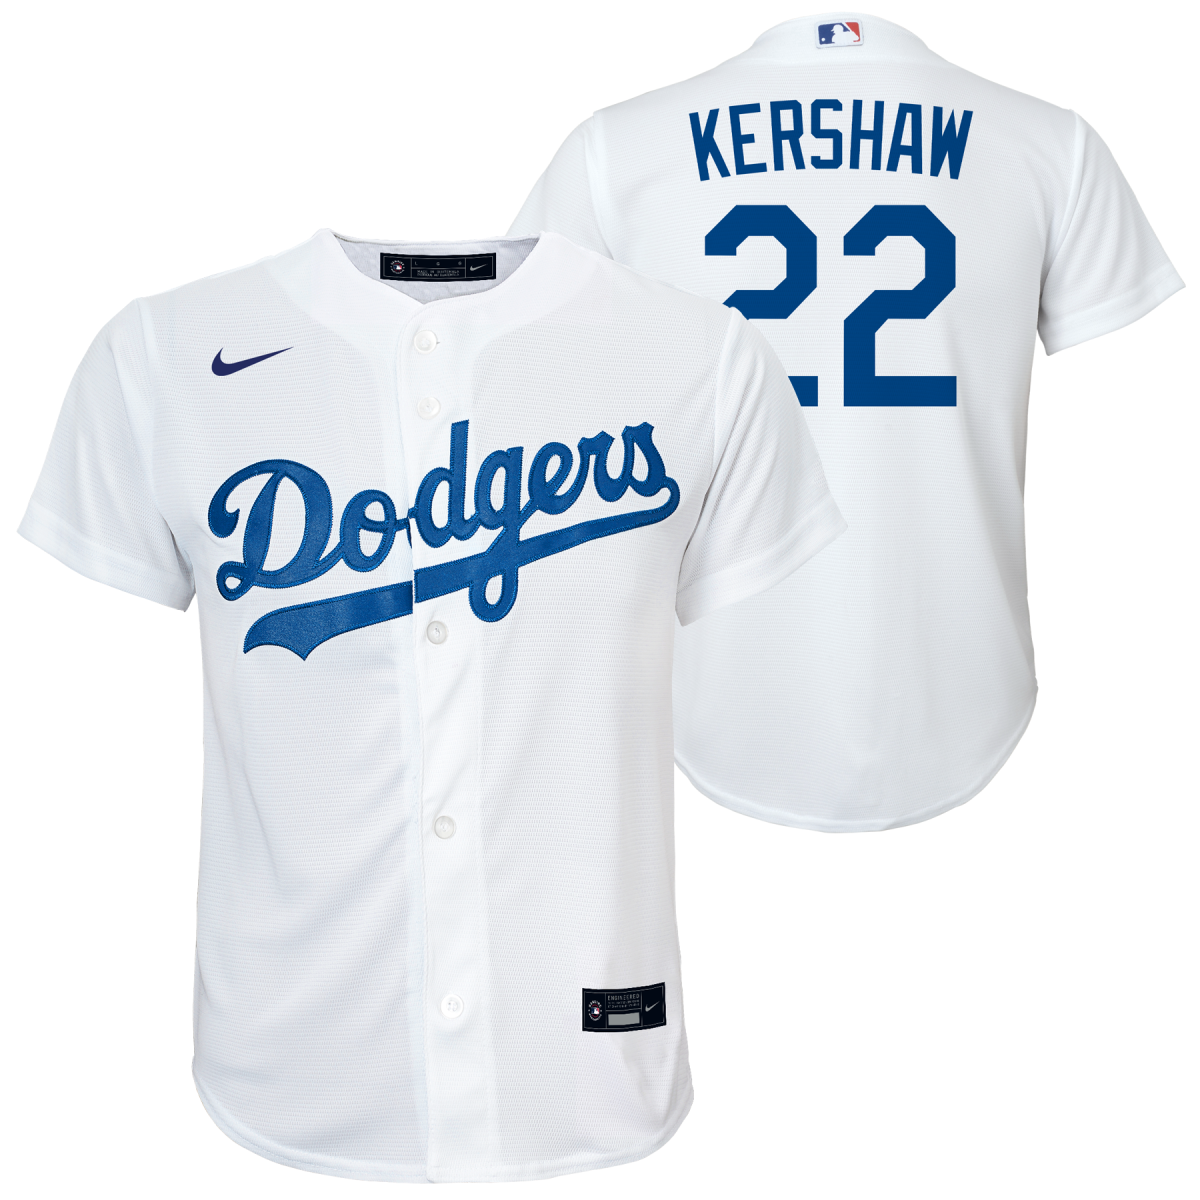 Clayton Kershaw Los Angeles Dodgers #22 Adult M L XL 2XL White Blue Jersey